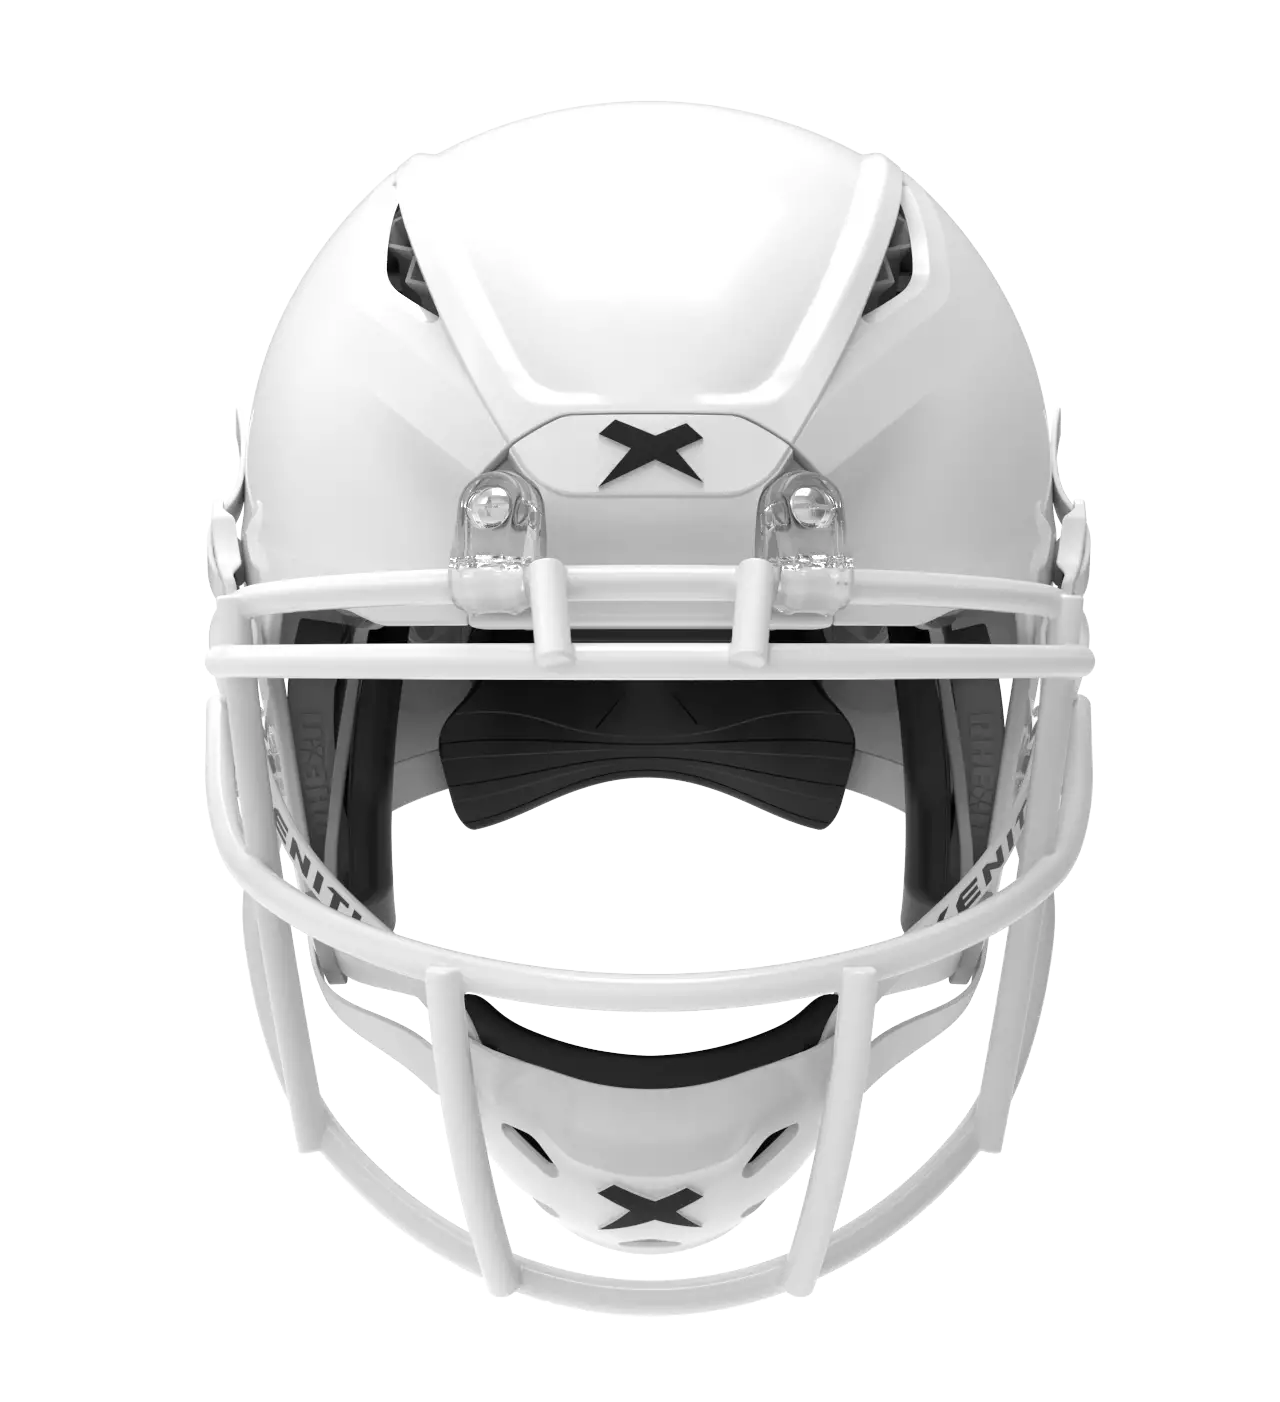 Shadow XR Varsity  Xenith Football Helmets, Shoulder Pads & Facemasks